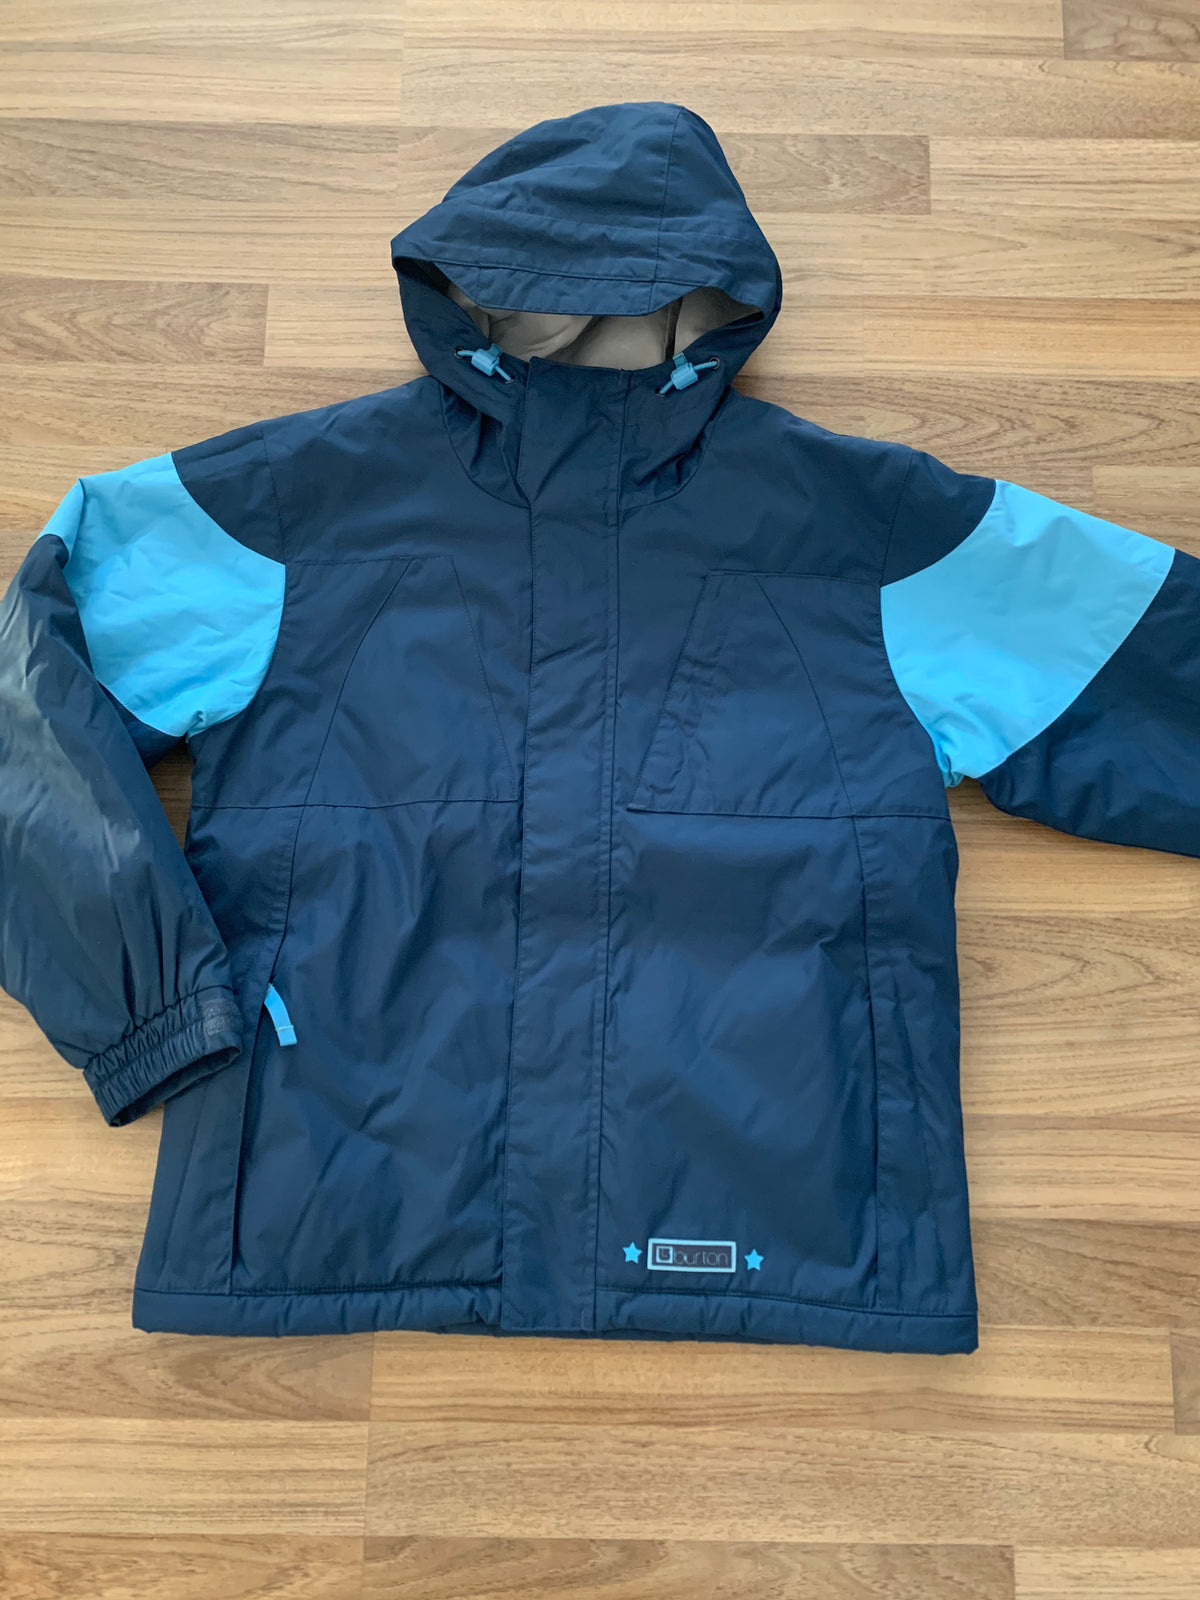 Full Zip Winter Jacket (Girls Size 14-16)